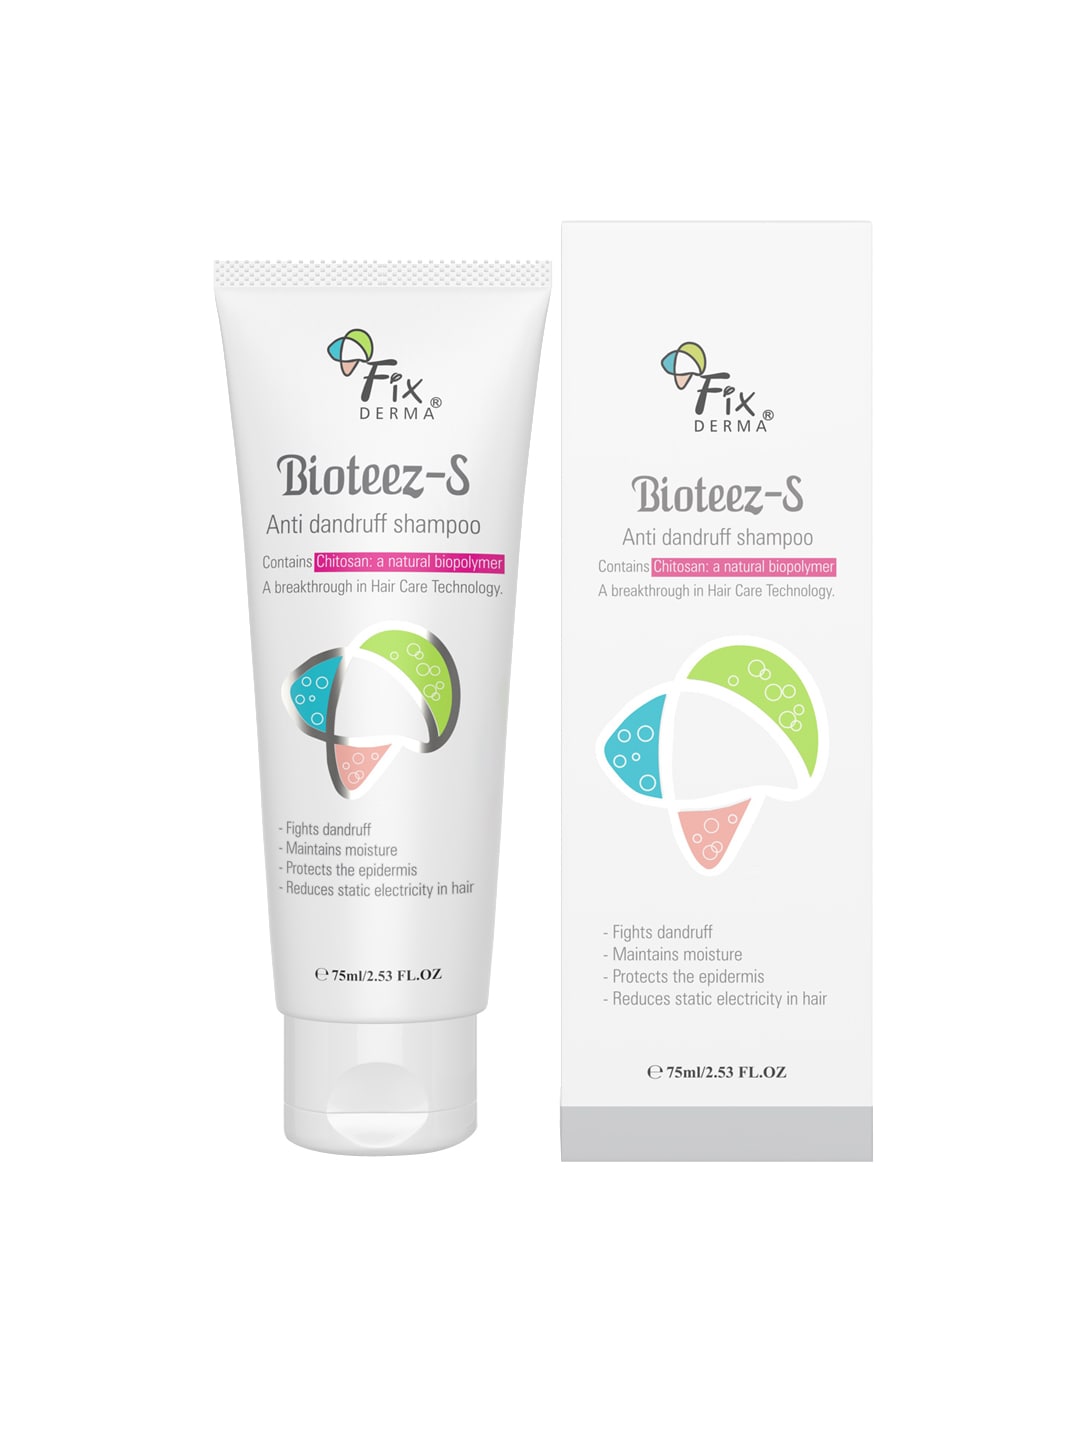 FIXDERMA Bioteez-S Anti Dandruff Shampoo with Chitosan 75 ml Price in India